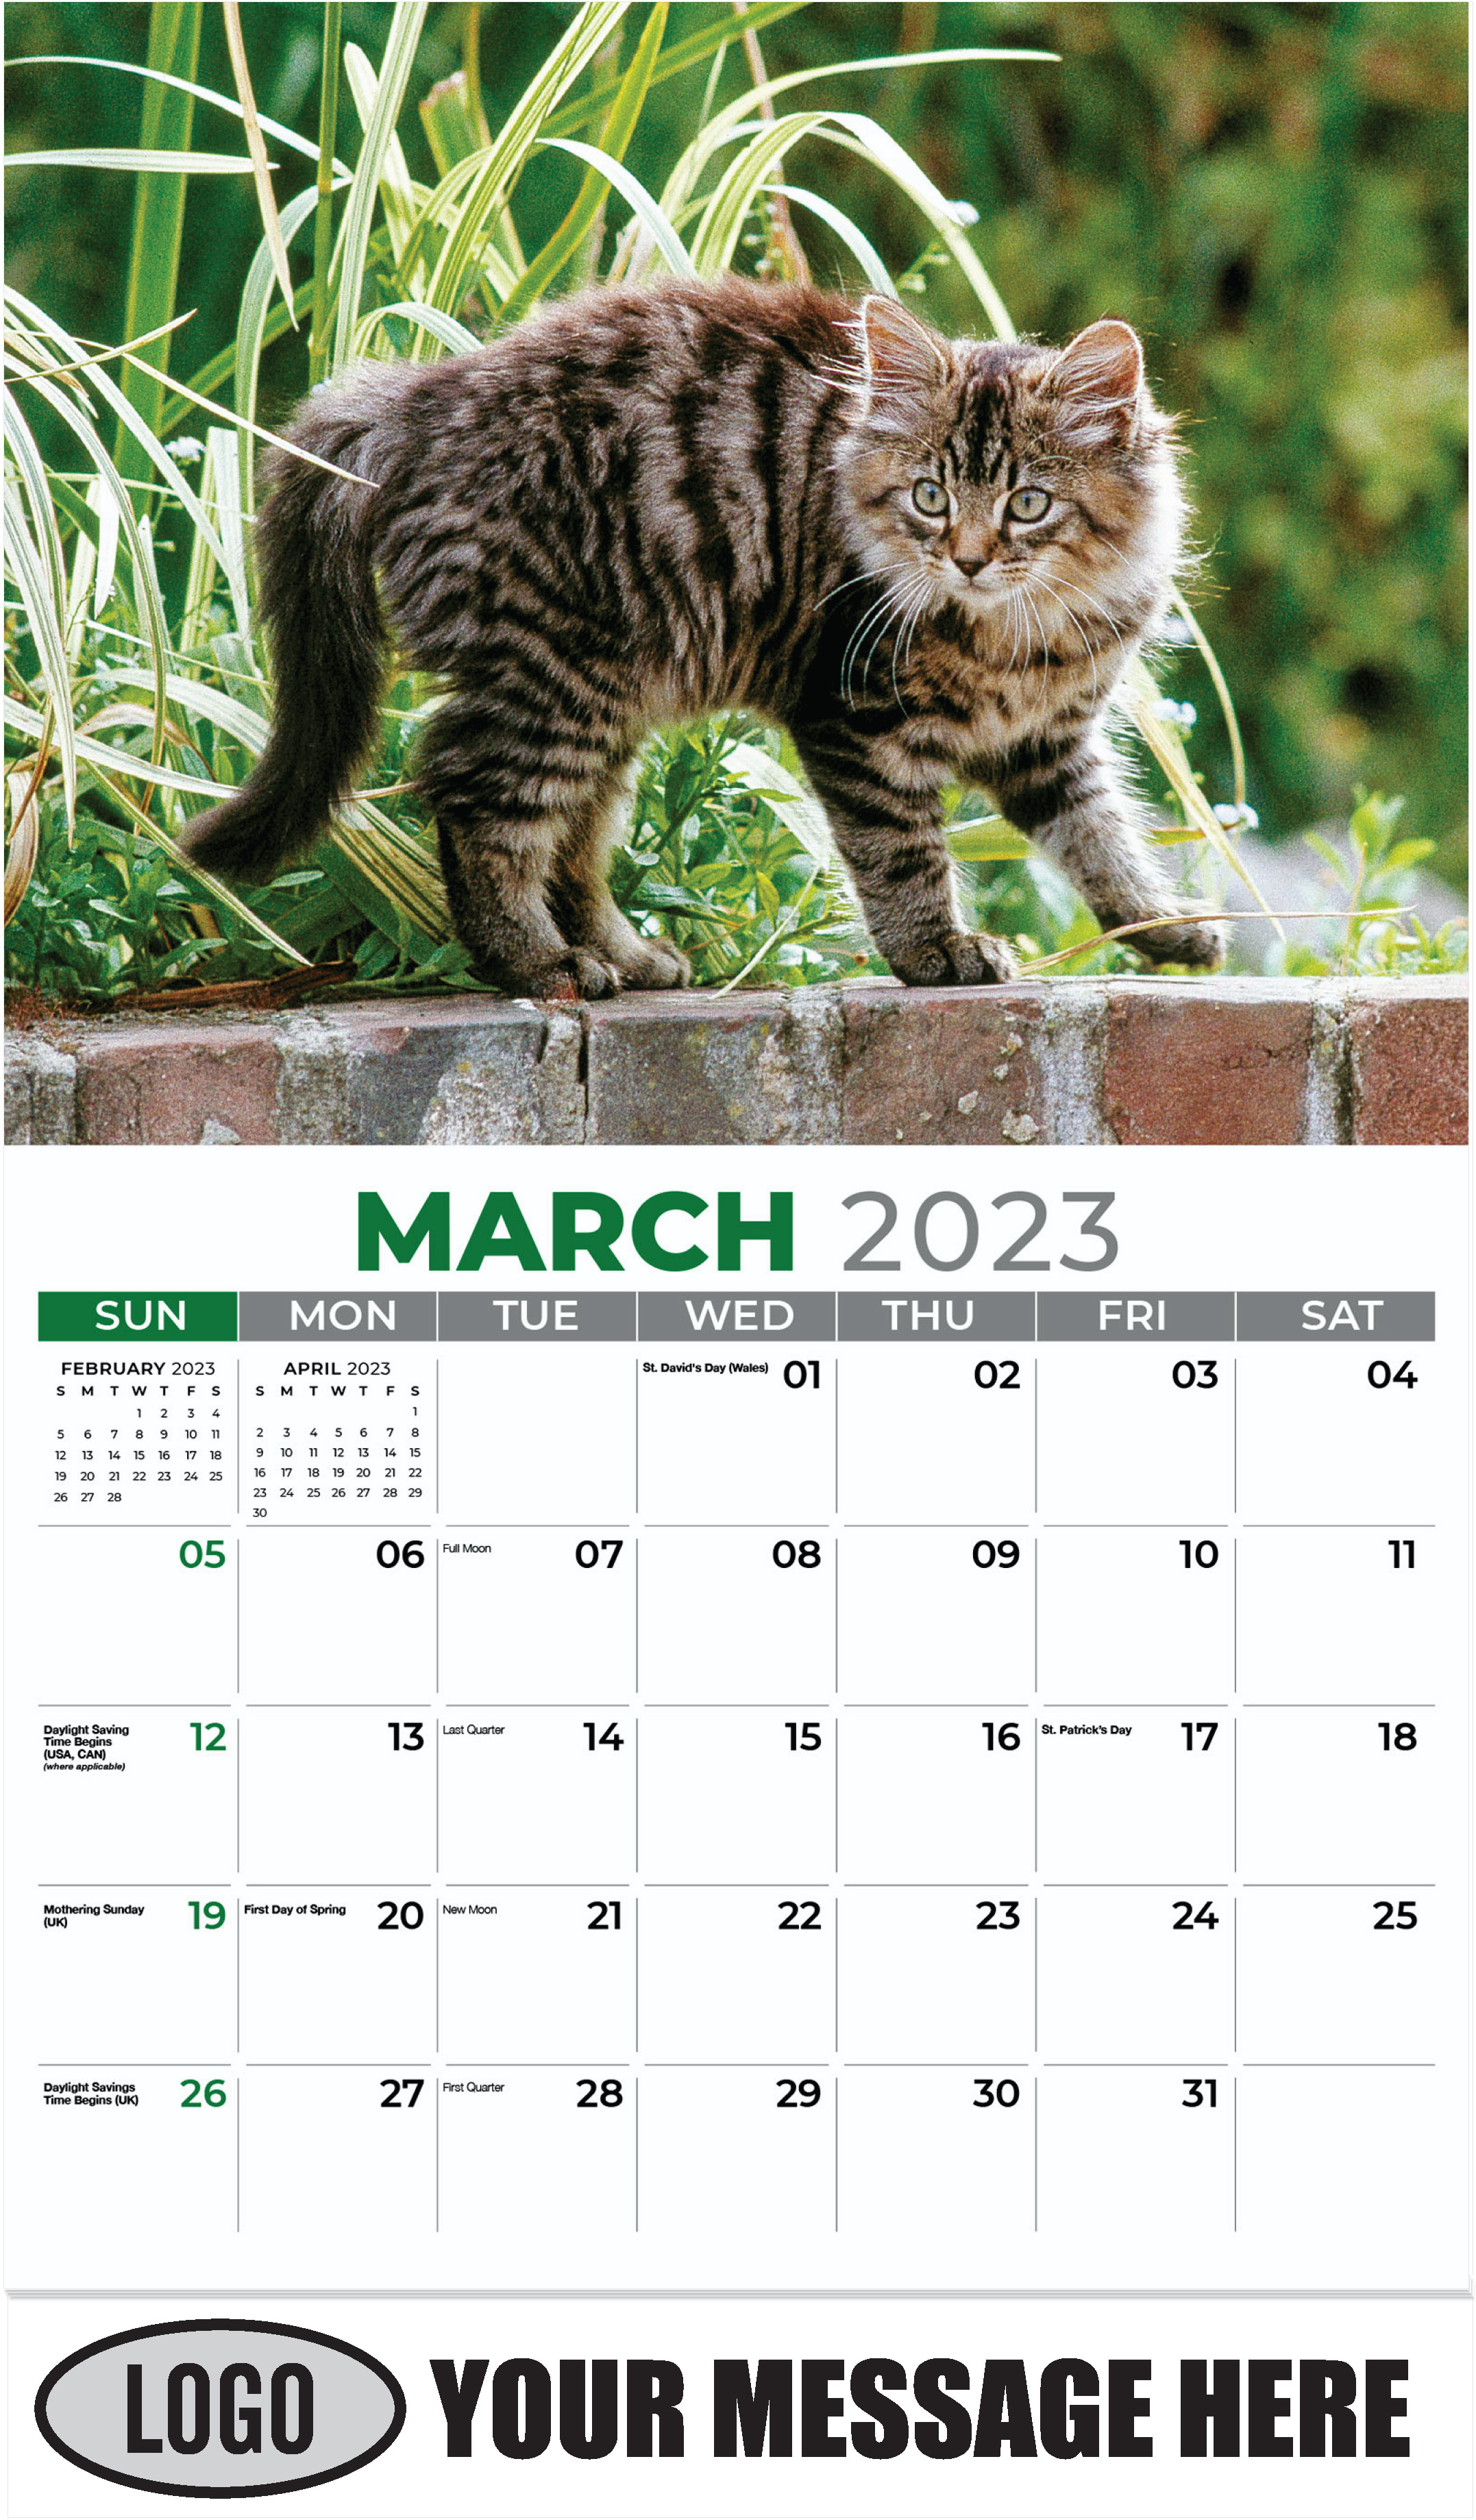 Domestic Cat - March - Pets 2023 Promotional Calendar